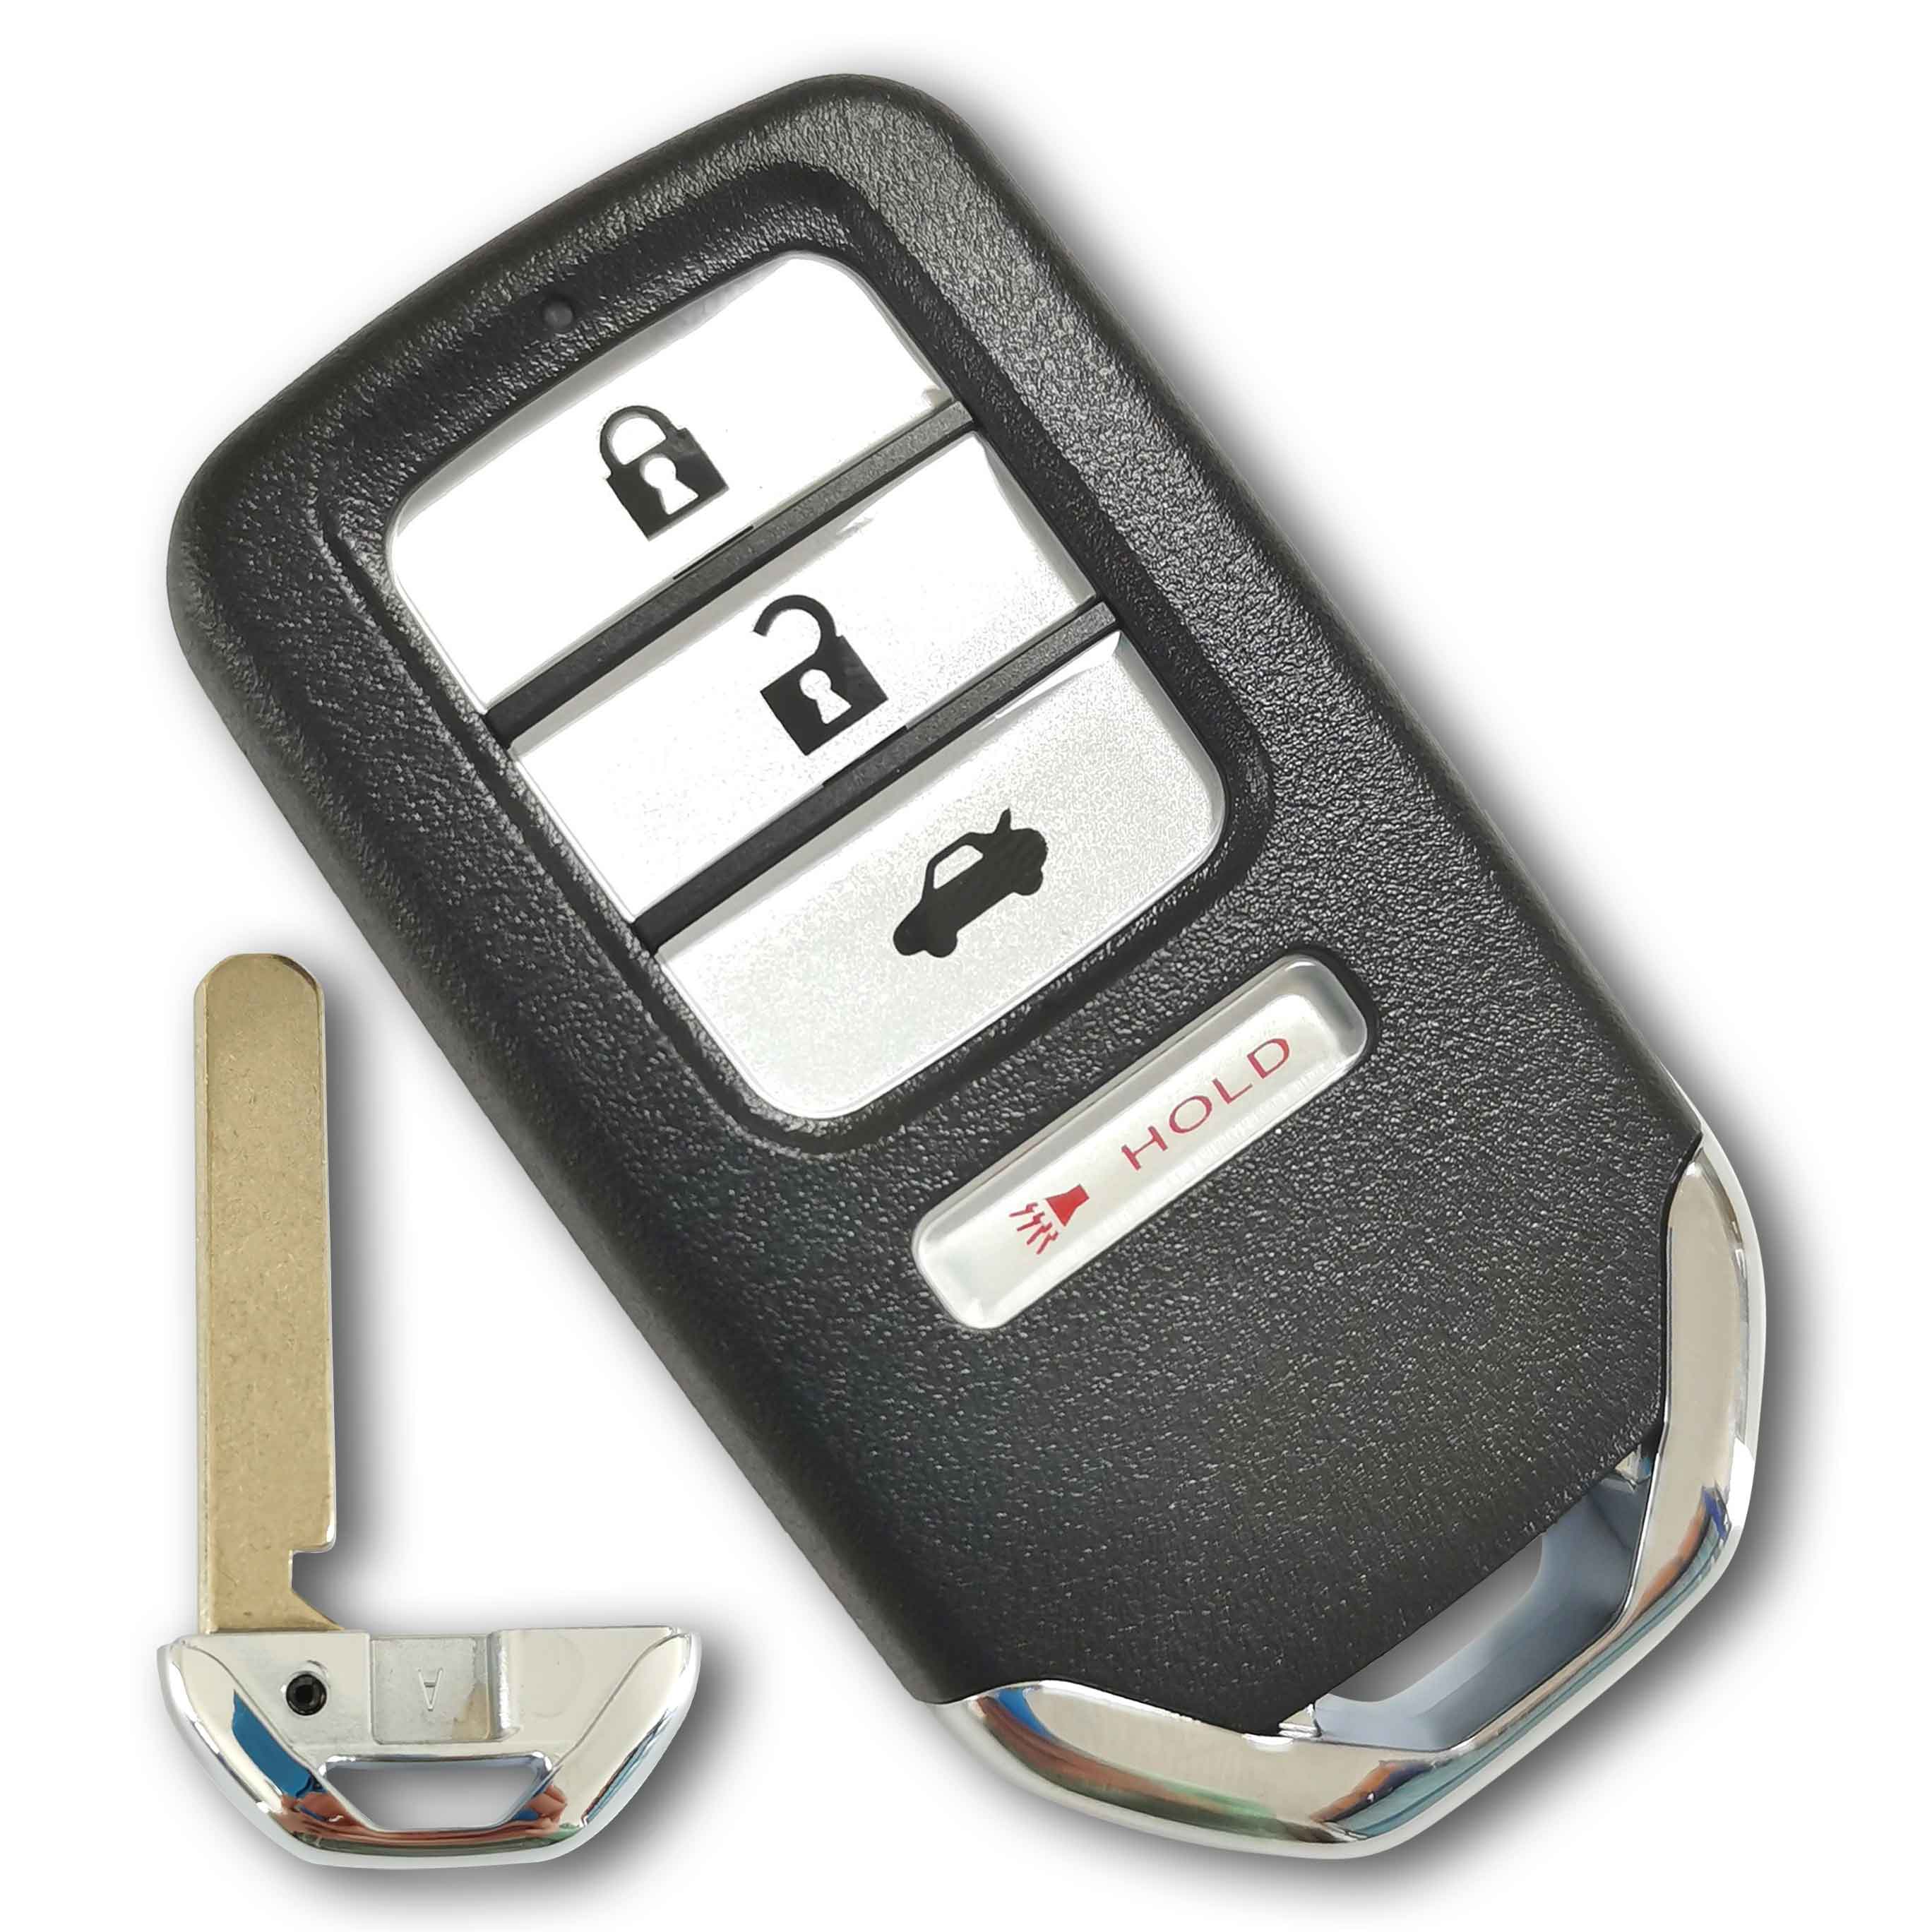 313.8 MHz Smart Key for 2013 ~ 2015 Honda Civic Accord EX & Touring Models / ACJ932HK1210A